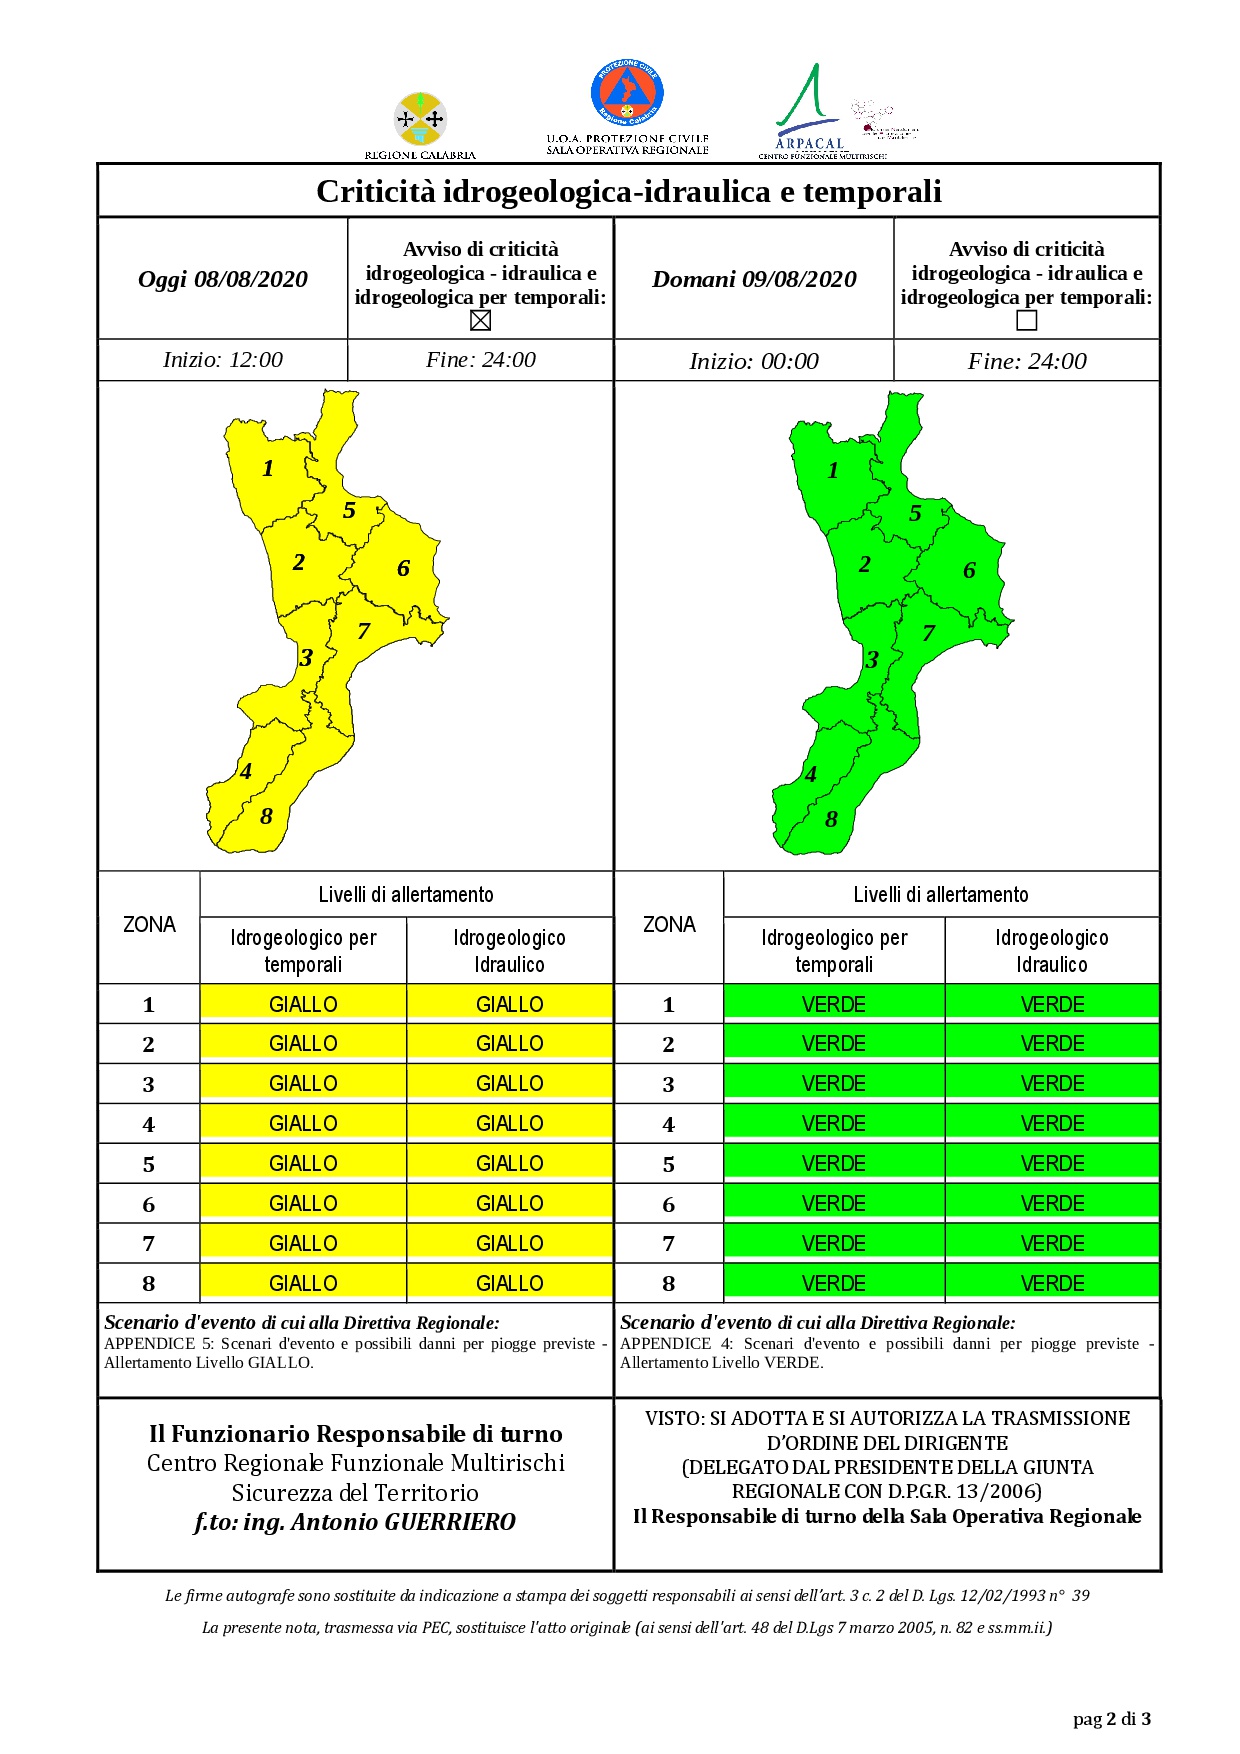 Criticità idrogeologica-idraulica e temporali in Calabria 08-08-2020